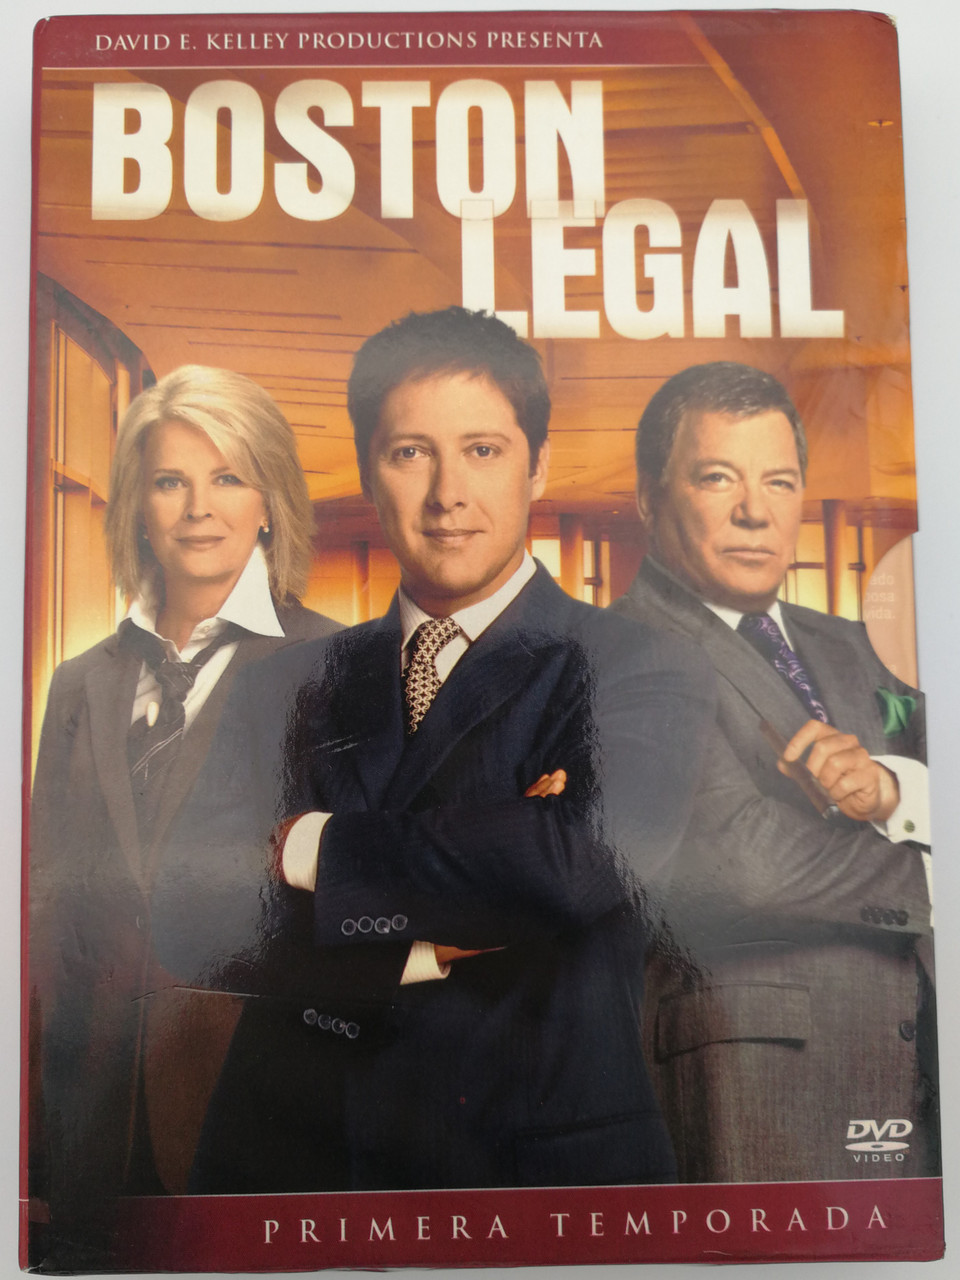 Boston Legal DVD BOX 2004 5DVD First Season - Primera Temporada / Created  by David E. Kelley / Starring: James Spader, William Shatner, Candice  Bergen, Monica Potter - bibleinmylanguage